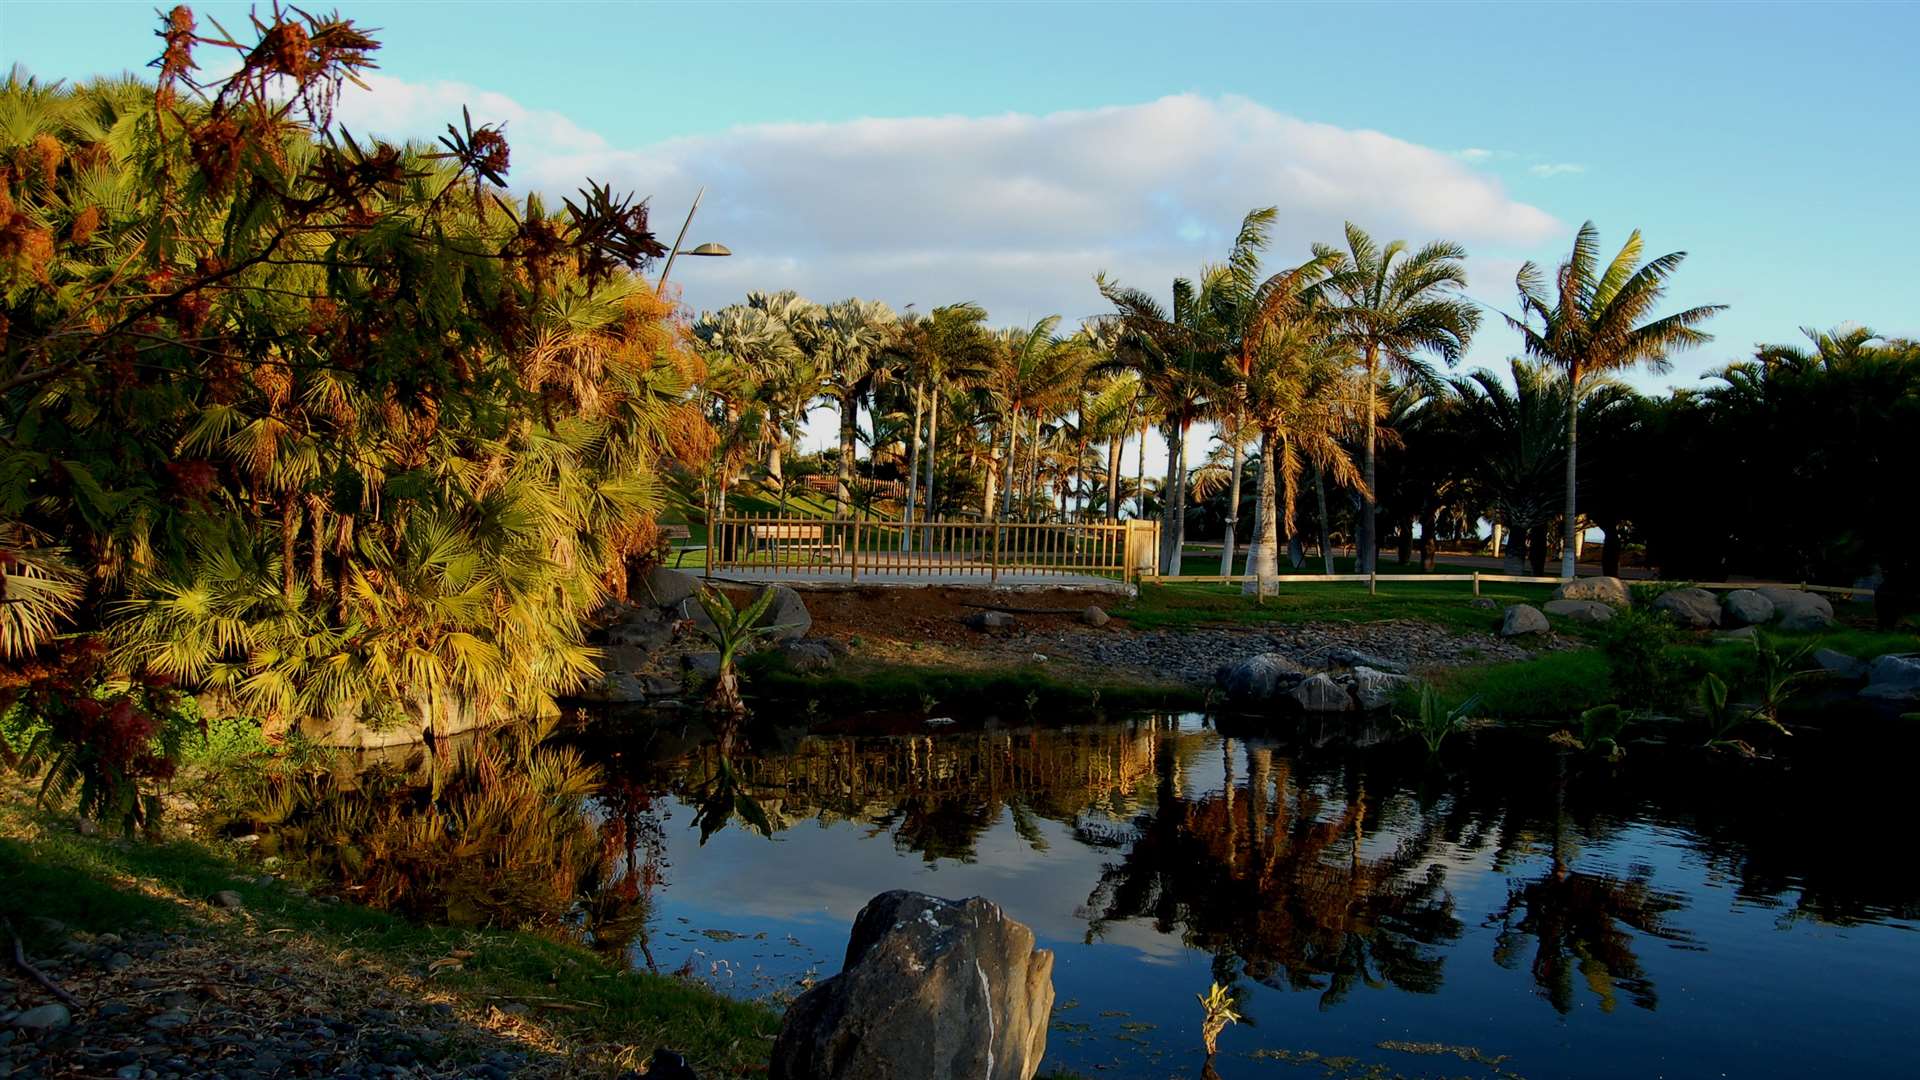 The Palmetum Tenerife